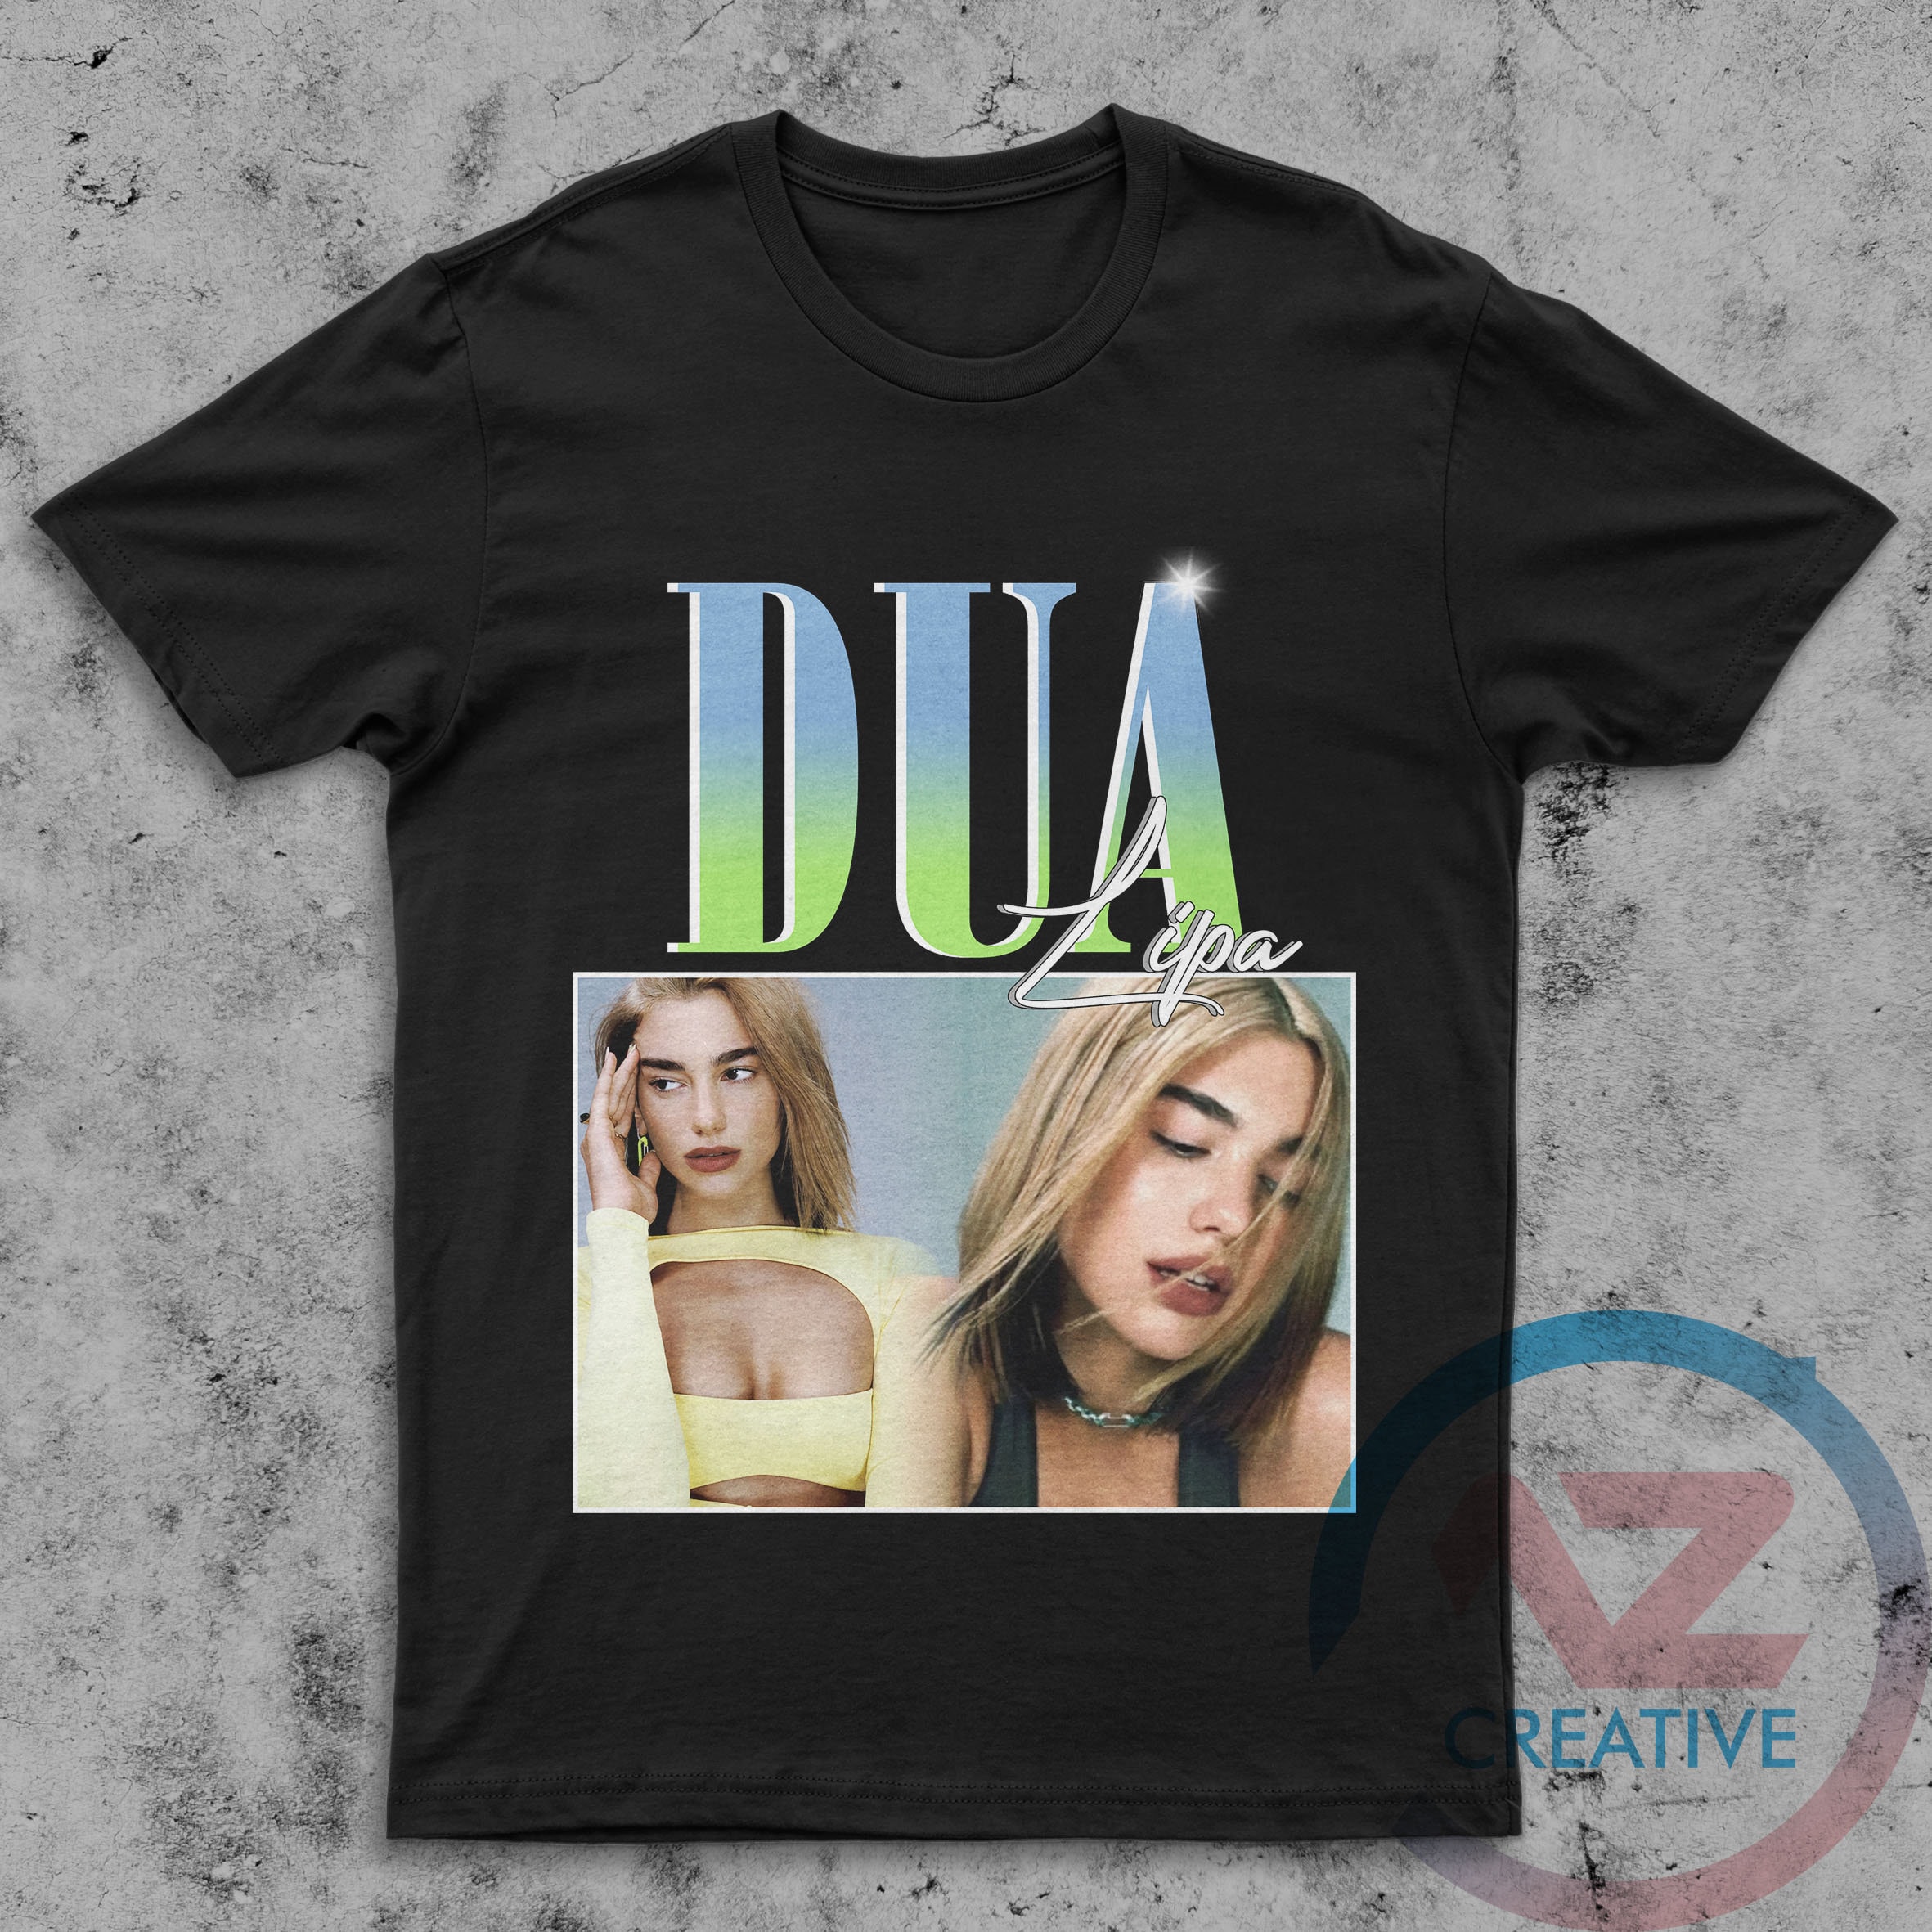 Discover Maglietta Dua Lipa Rap Hip Hop 90s Retro Vintage Pop Music RnB T-Shirt Uomo Donna Bambini